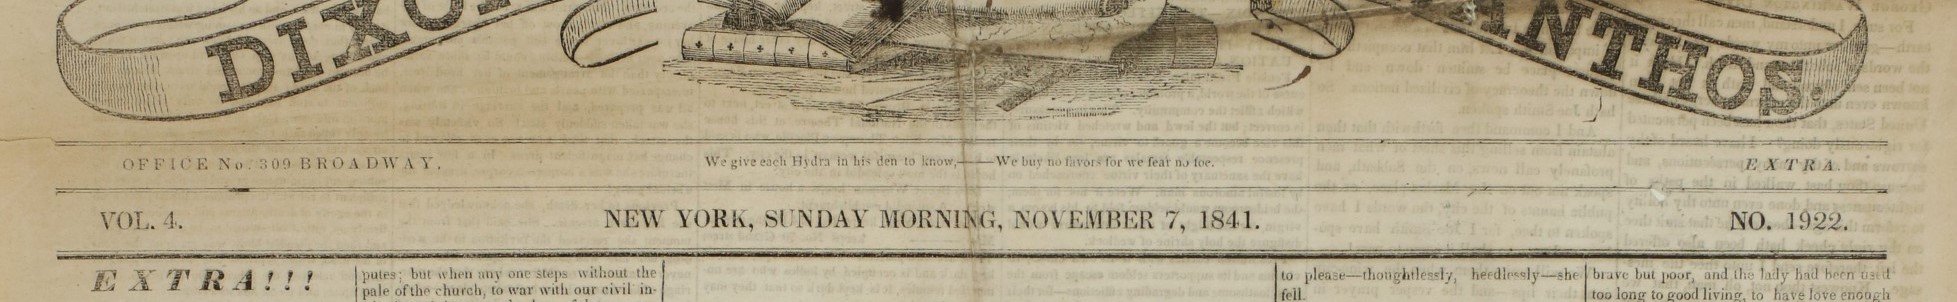 Detail from: Dixon's Polyanthos, November 7, 1841